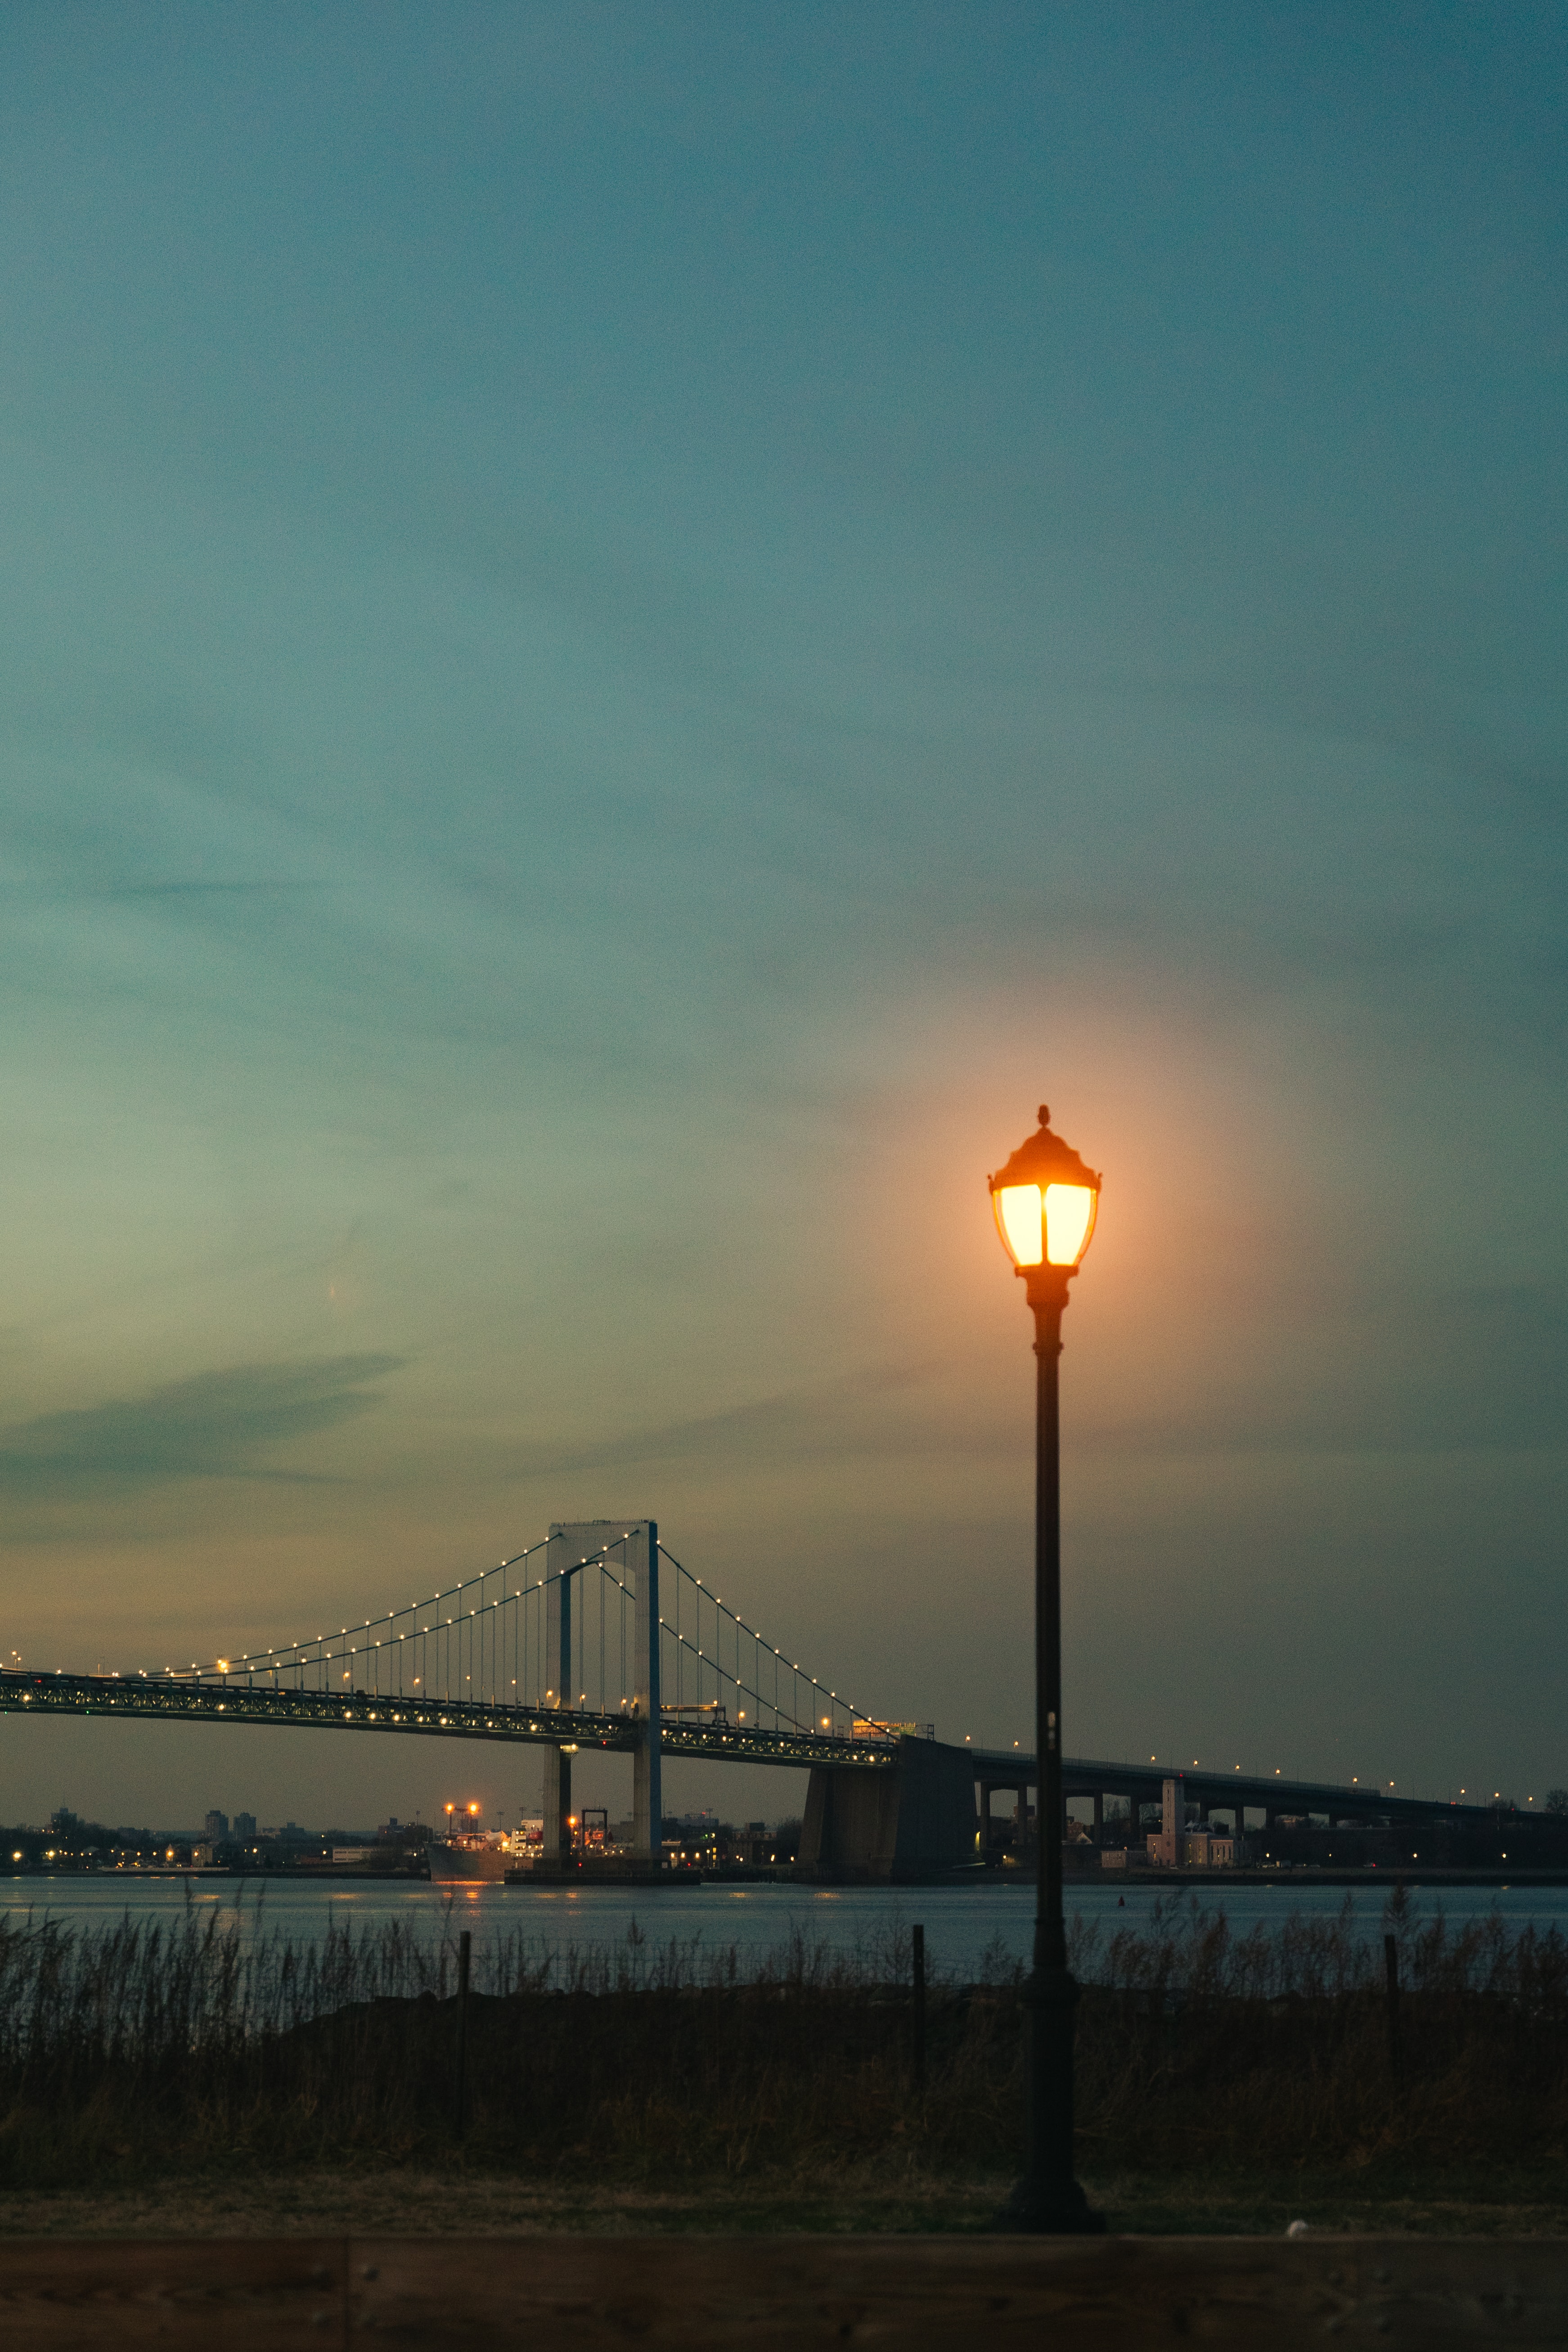 evening, lamp, bridge, dusk, lantern, twilight, nature, view cellphone